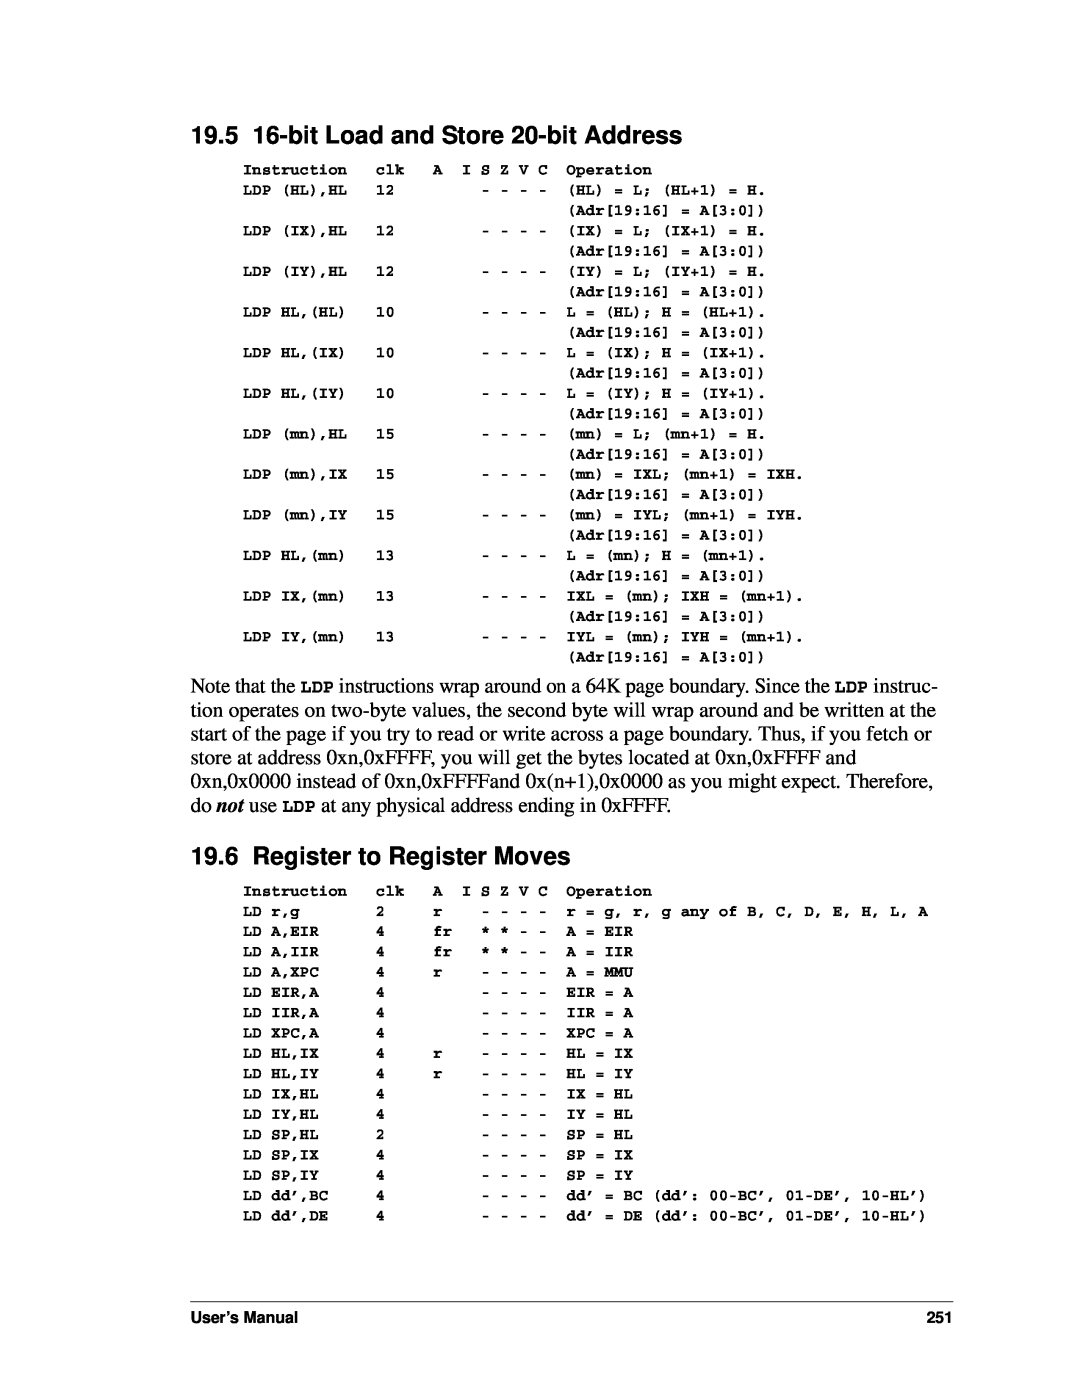 Jameco Electronics 3000, 2000 manual 19.5 16-bitLoad and Store 20-bitAddress, Register to Register Moves, User’s Manual 